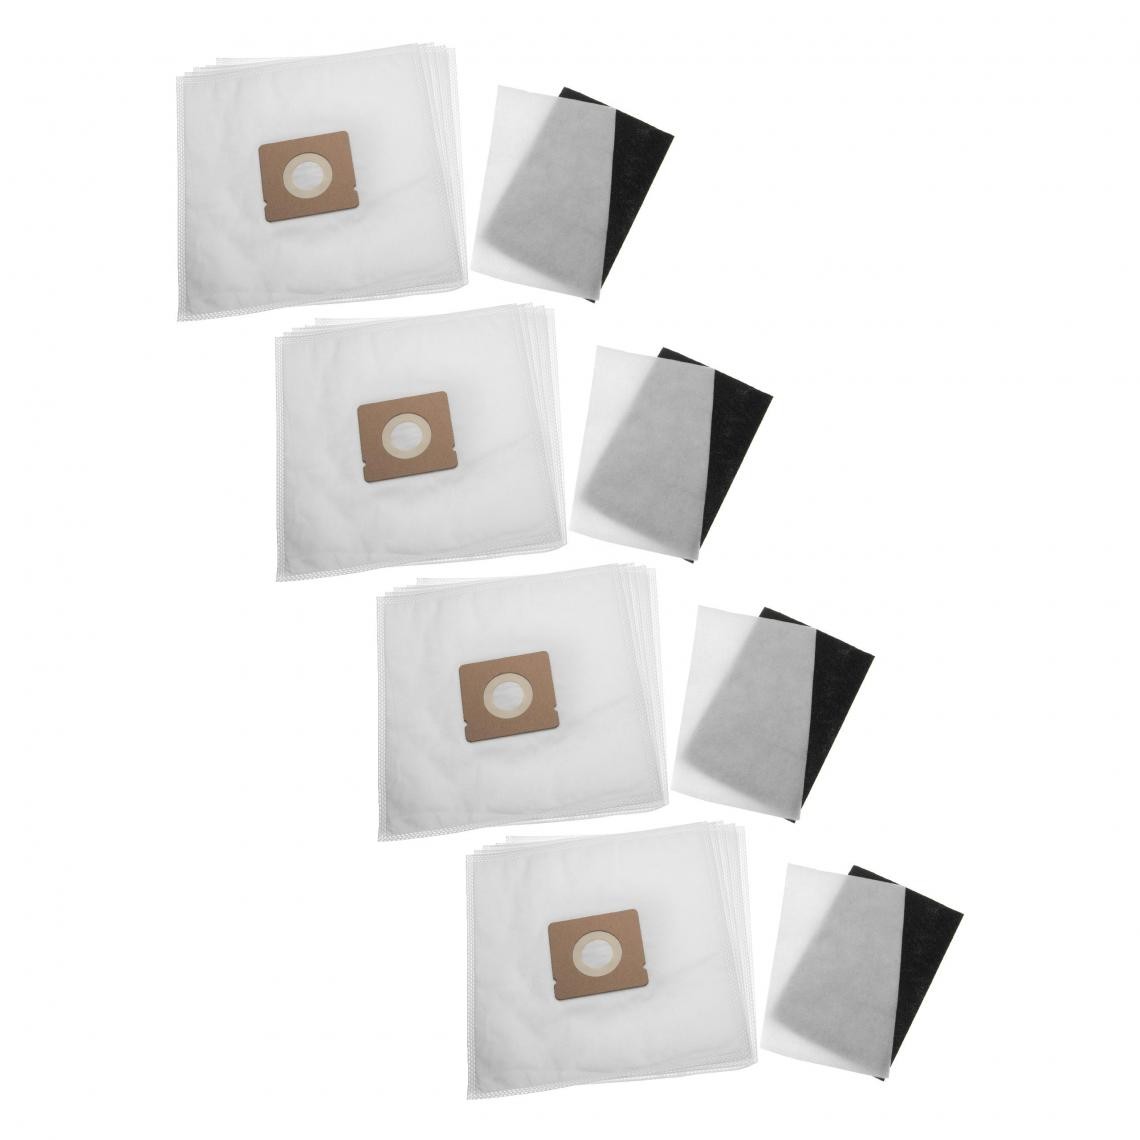 Vhbw - vhbw Lot de sacs (microfibres non tissées) + filtre avec 24 pièces compatible avec Moulinex MO151301/4Q0, MO151401/4Q0, MO151301, MO151401 aspirateur - Accessoire entretien des sols